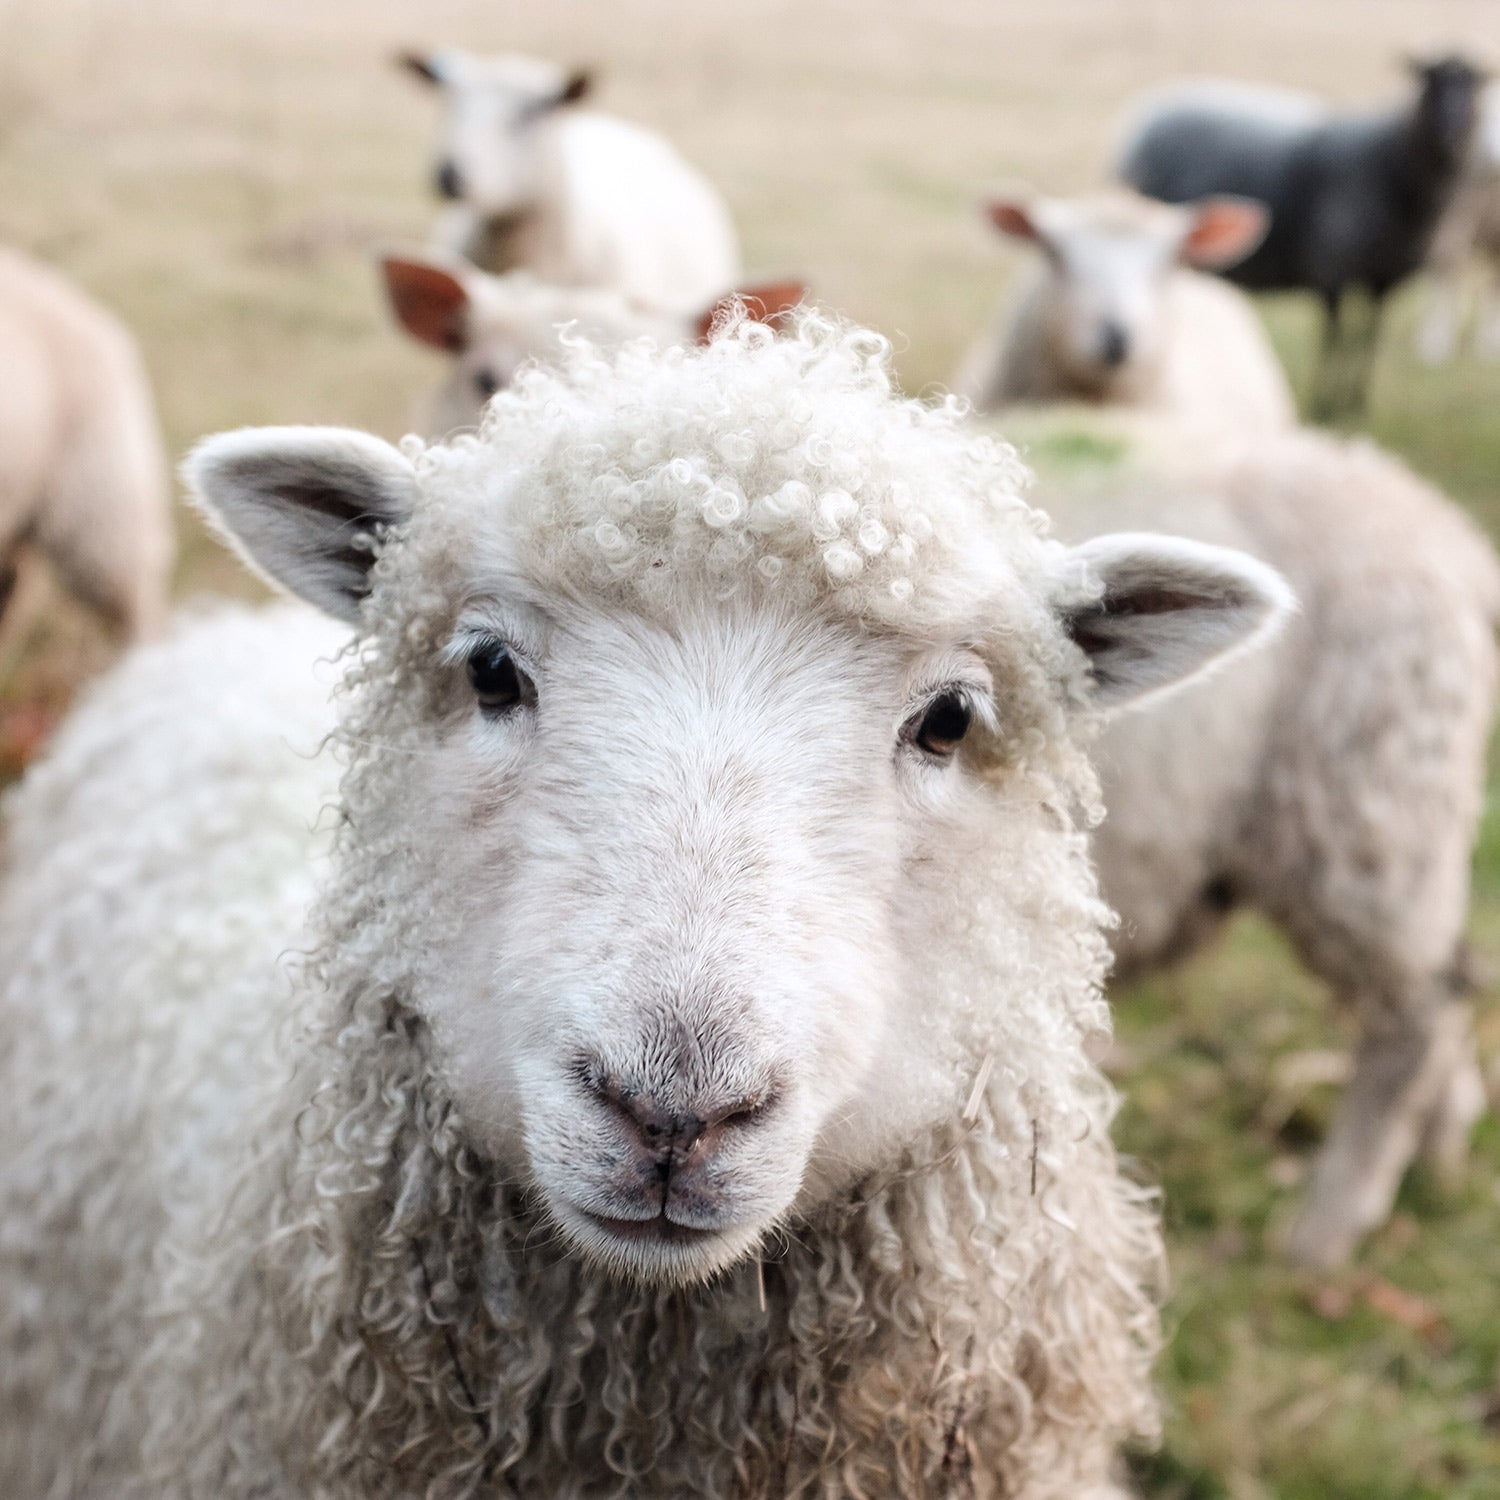 https://cdn.outsideonline.com/wp-content/uploads/2017/12/08/merino-wool-brands-sheep_s.jpg